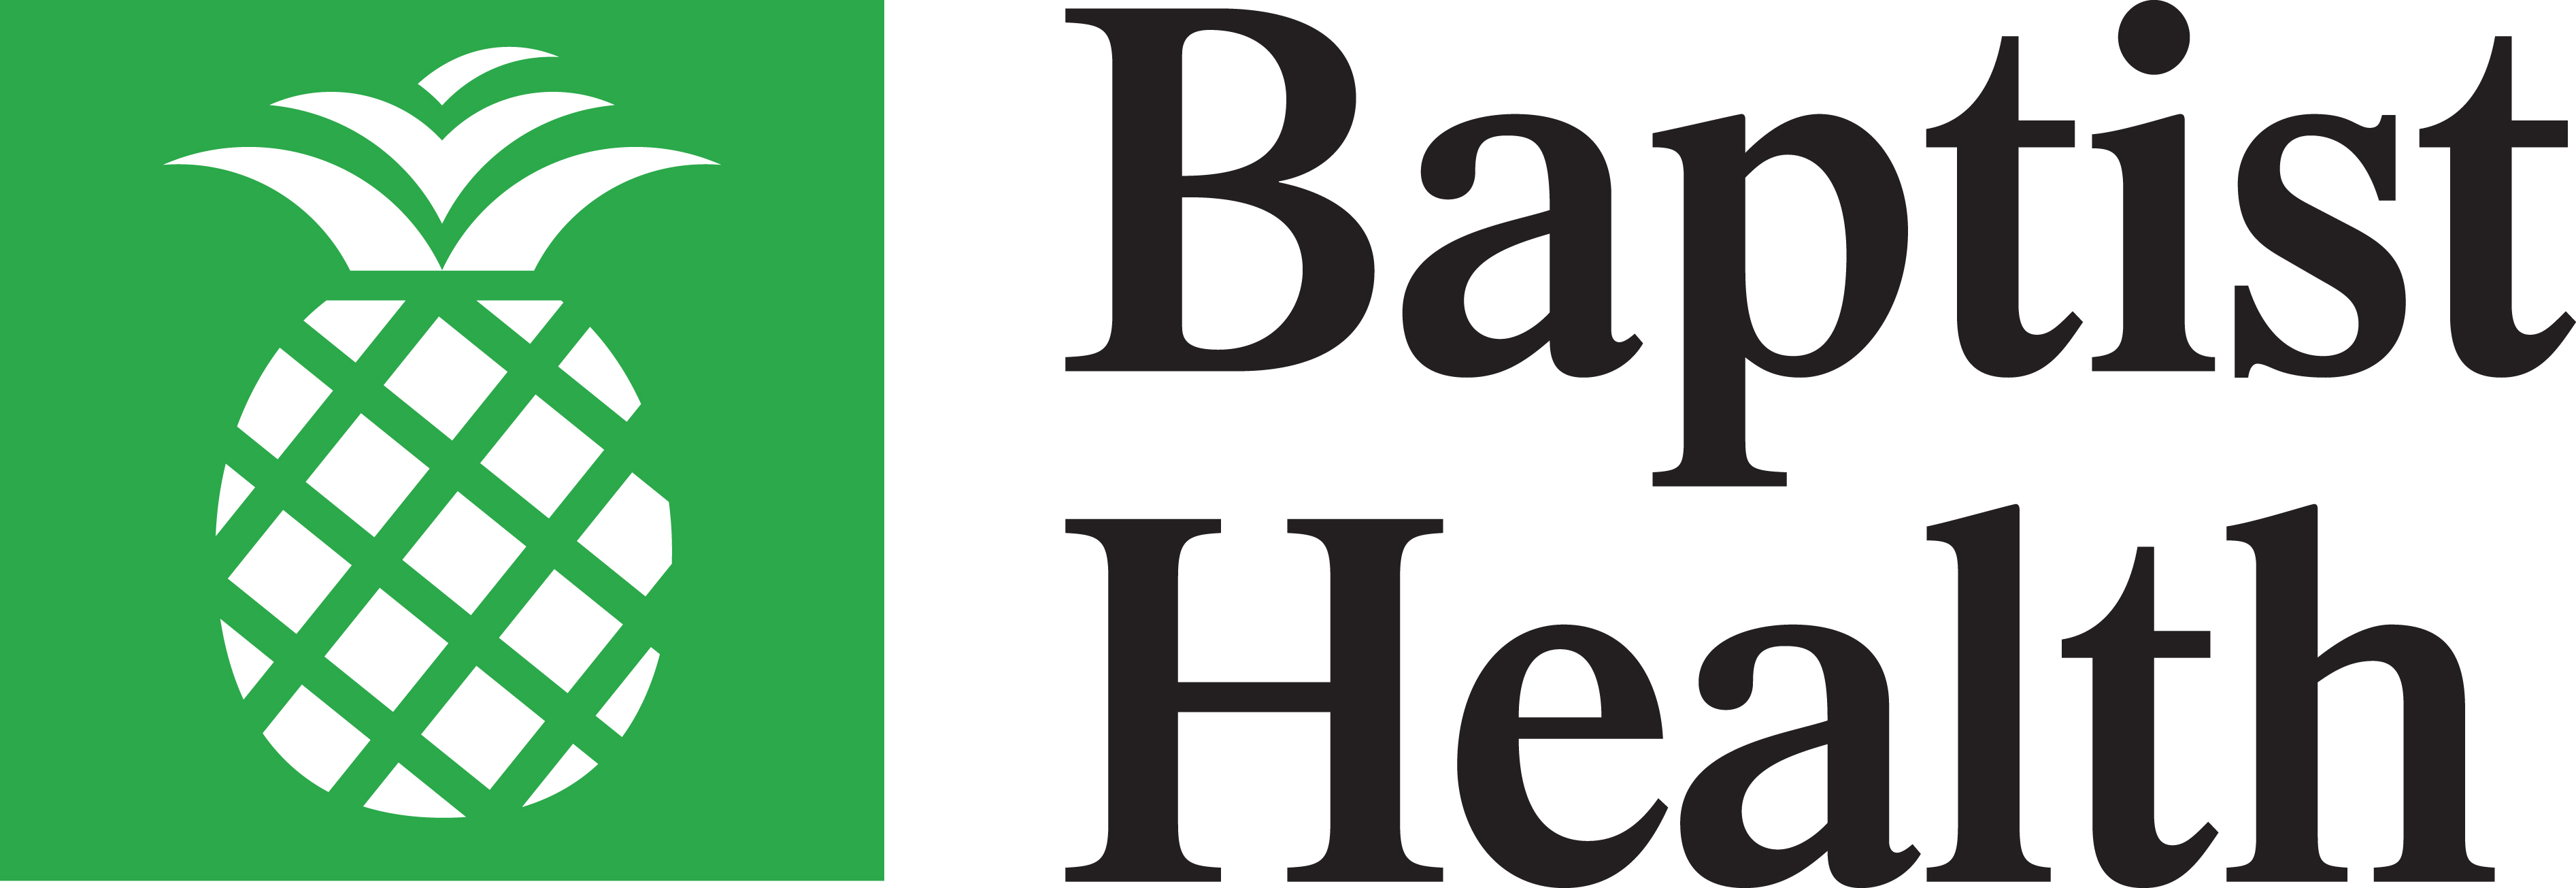 Baptist-Logo.jpg